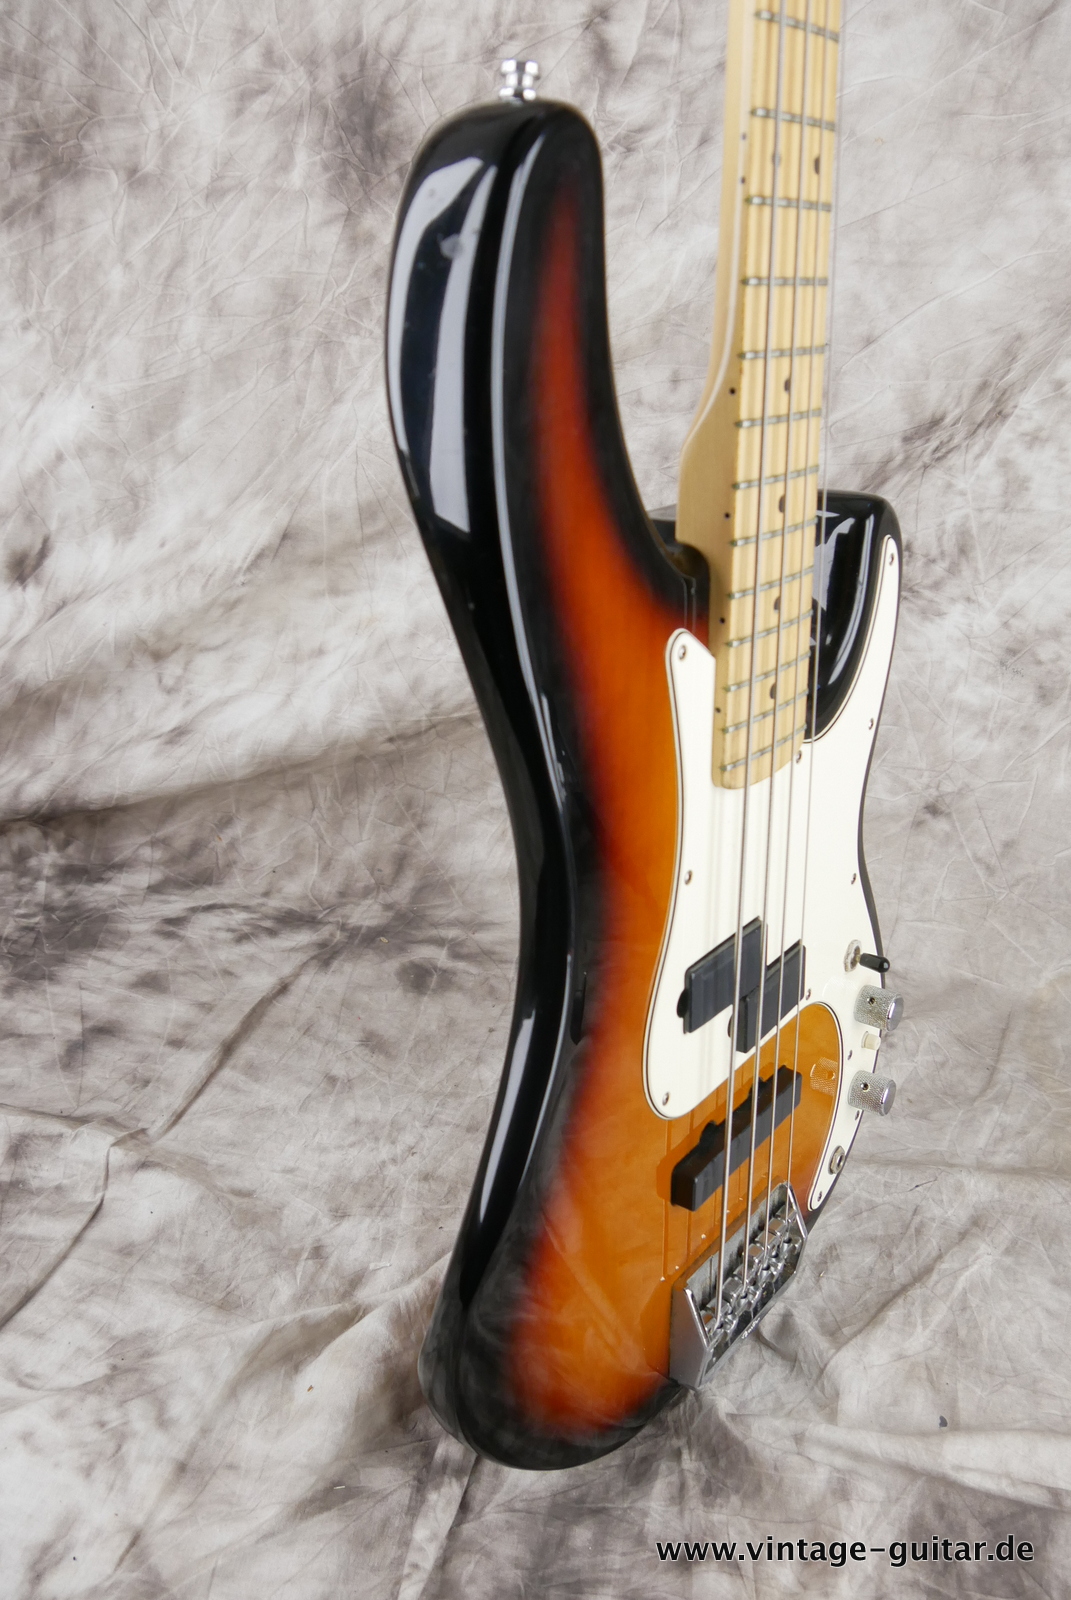 Fender_Precision_plus_USA_sunburst_1992-005.JPG